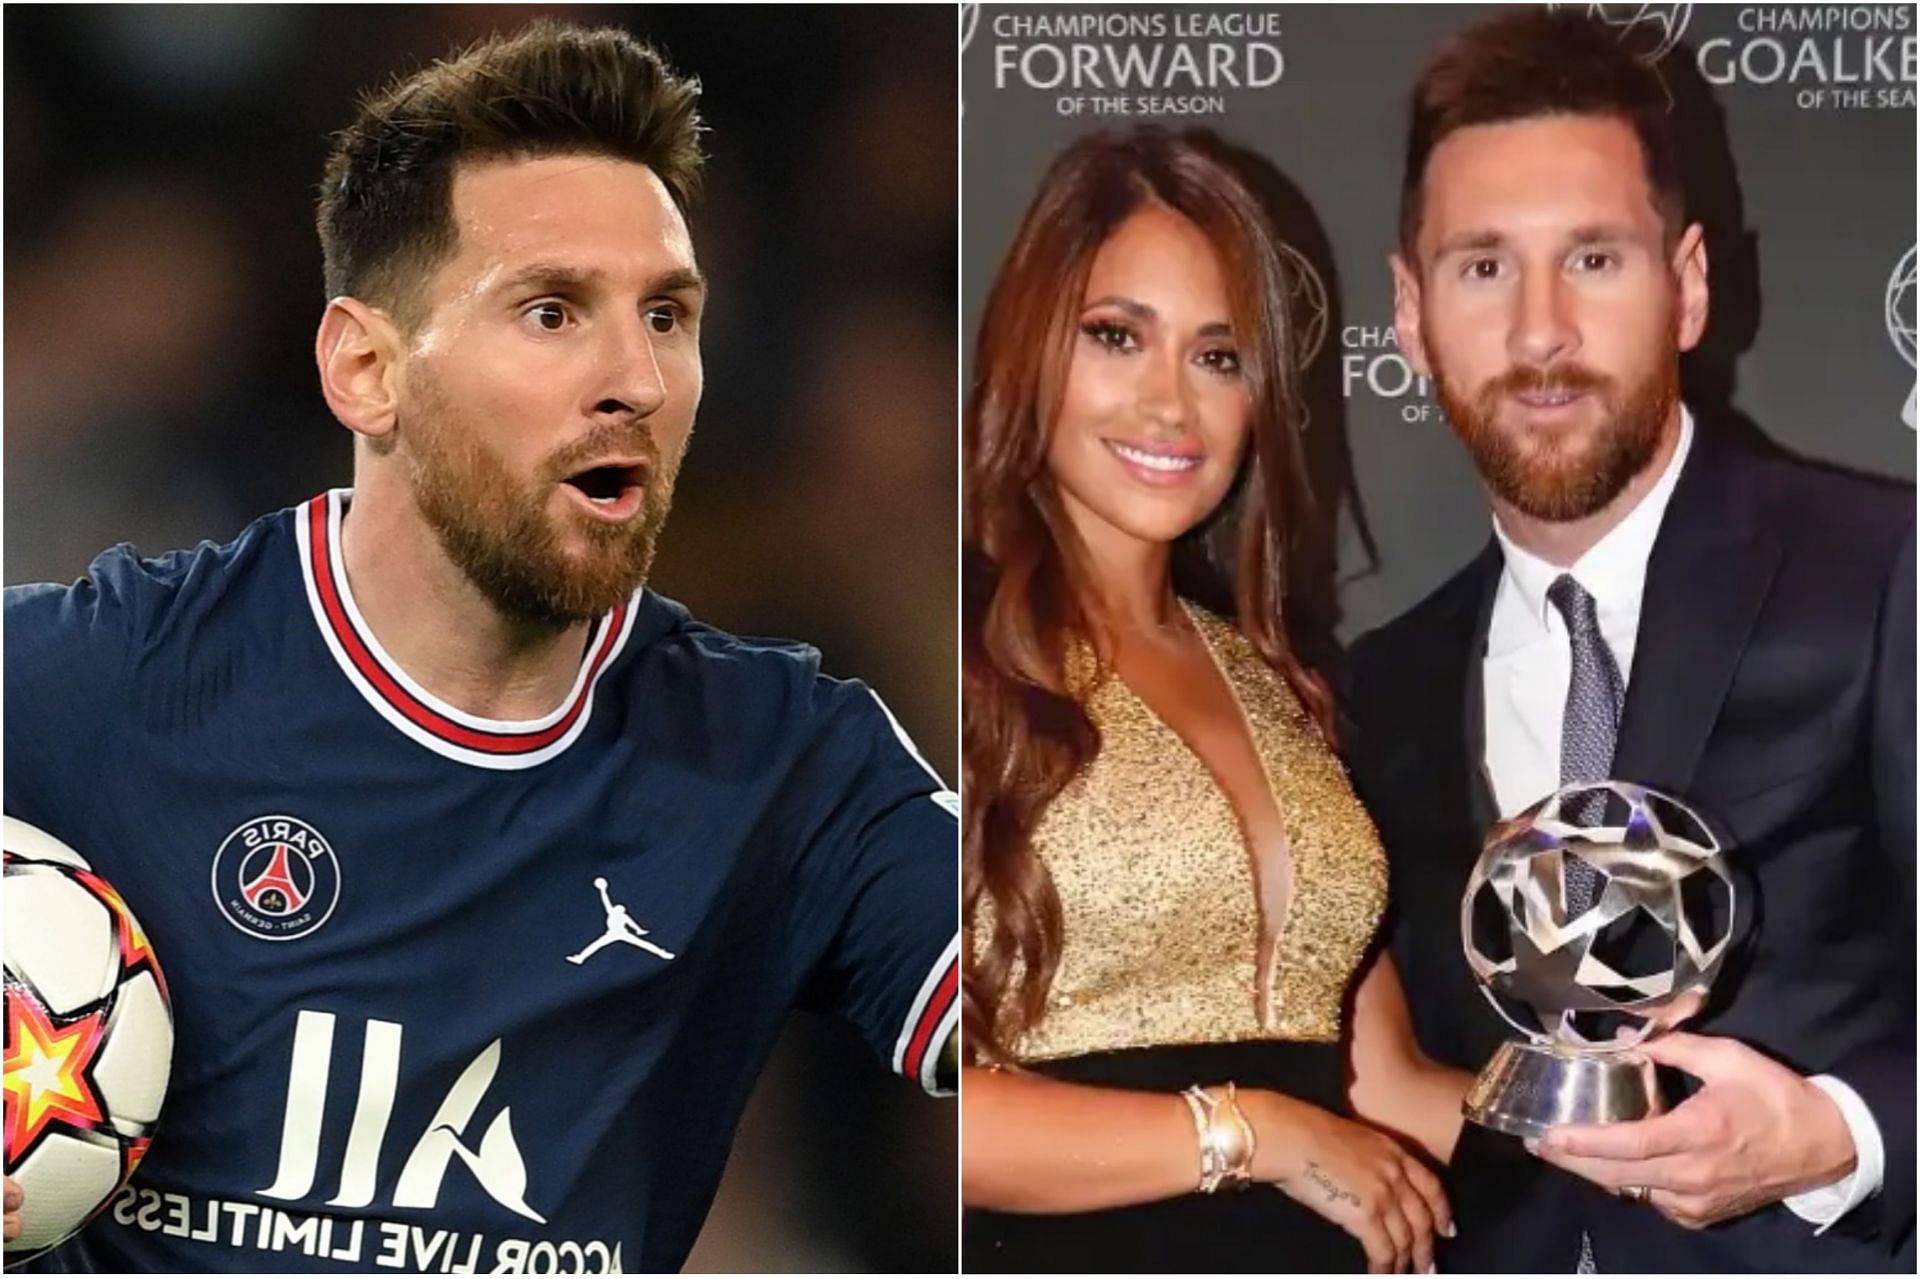 Lionel Messi Net worth, salary, relationship status, endorsements, age